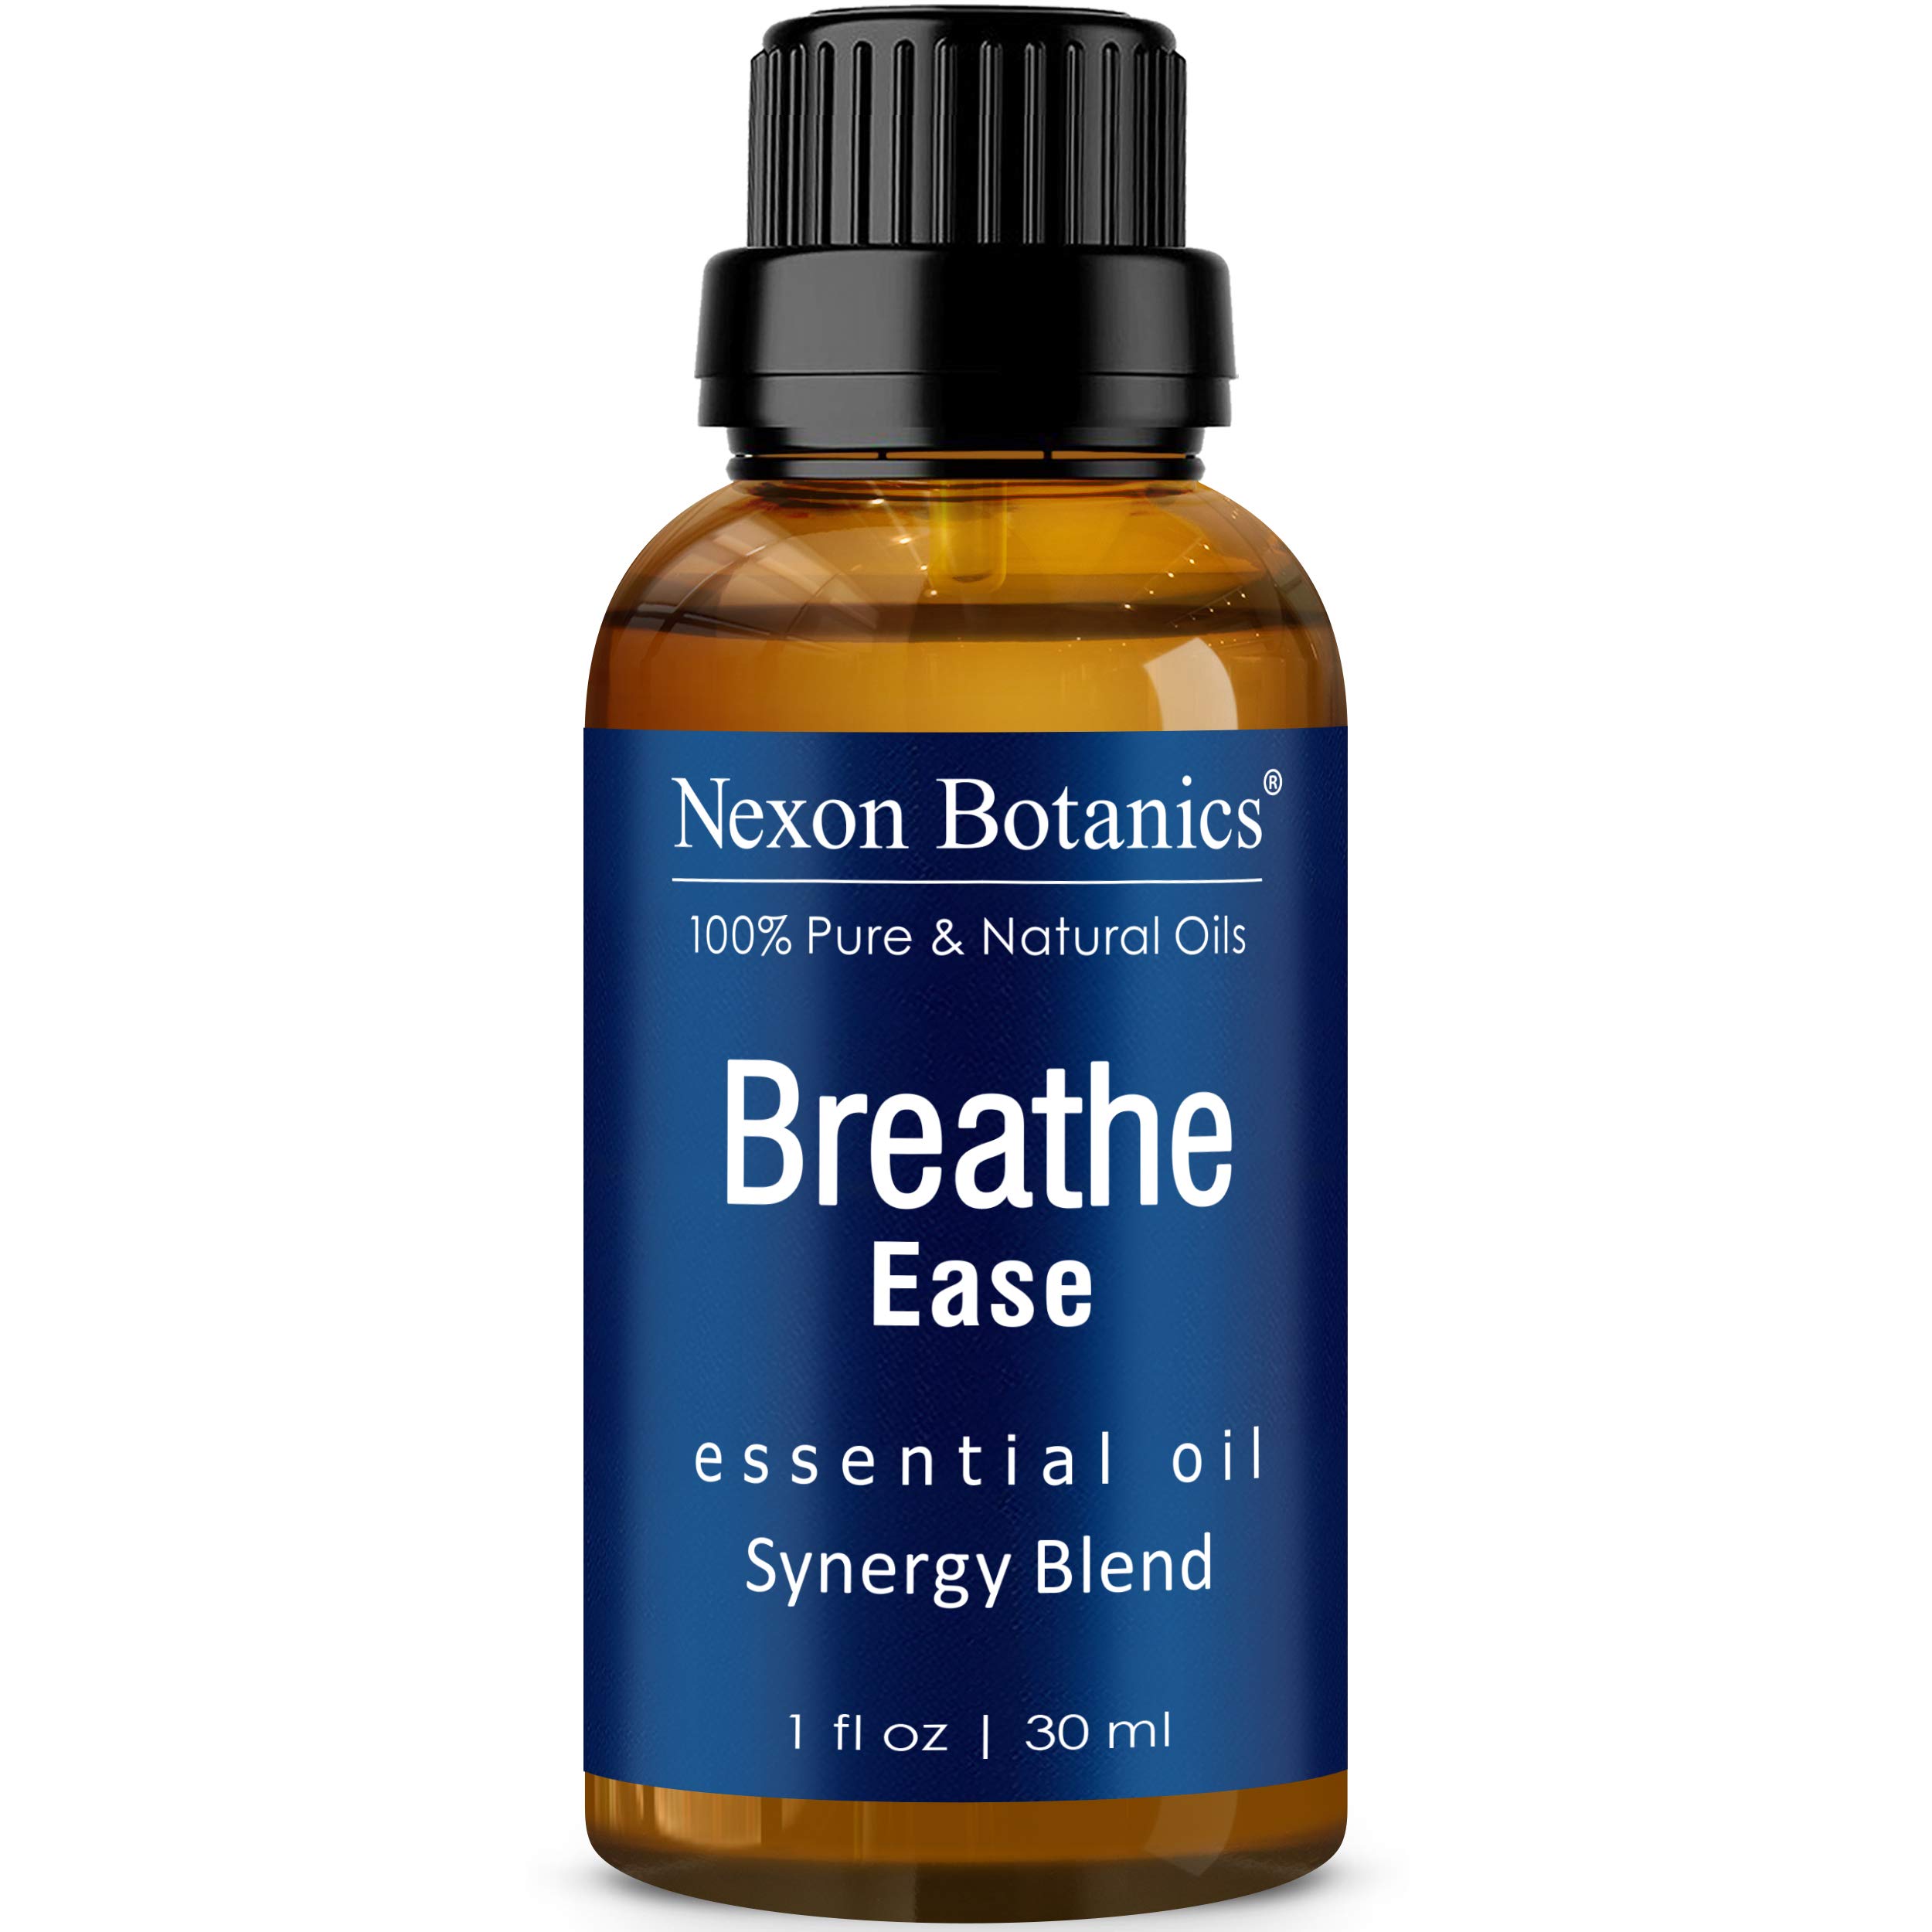 Nexon Botanics Breathe Essential Oil Blend 30 ml - Breath Easy Essential Oil Sinus Relief - Breath Essential Oils for Humidifier - Essential Oi